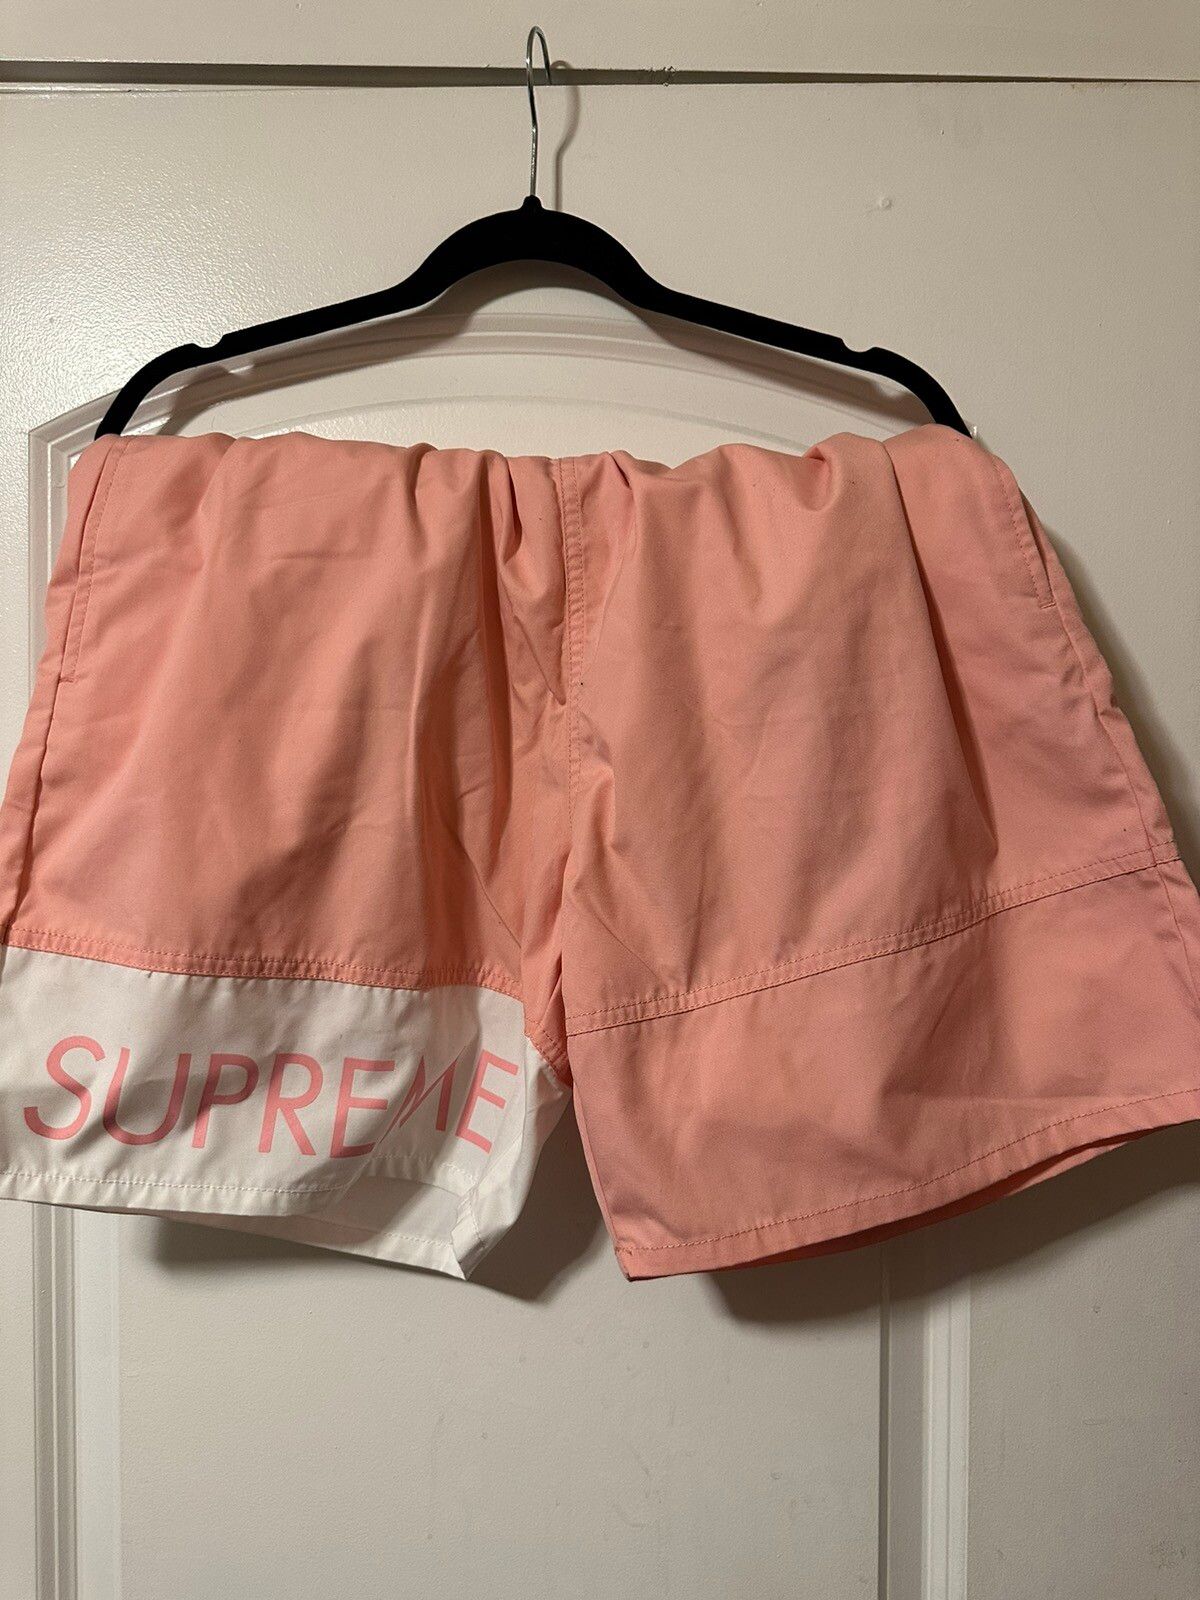 Supreme Supreme Banner Water Shorts Pink XL | Grailed